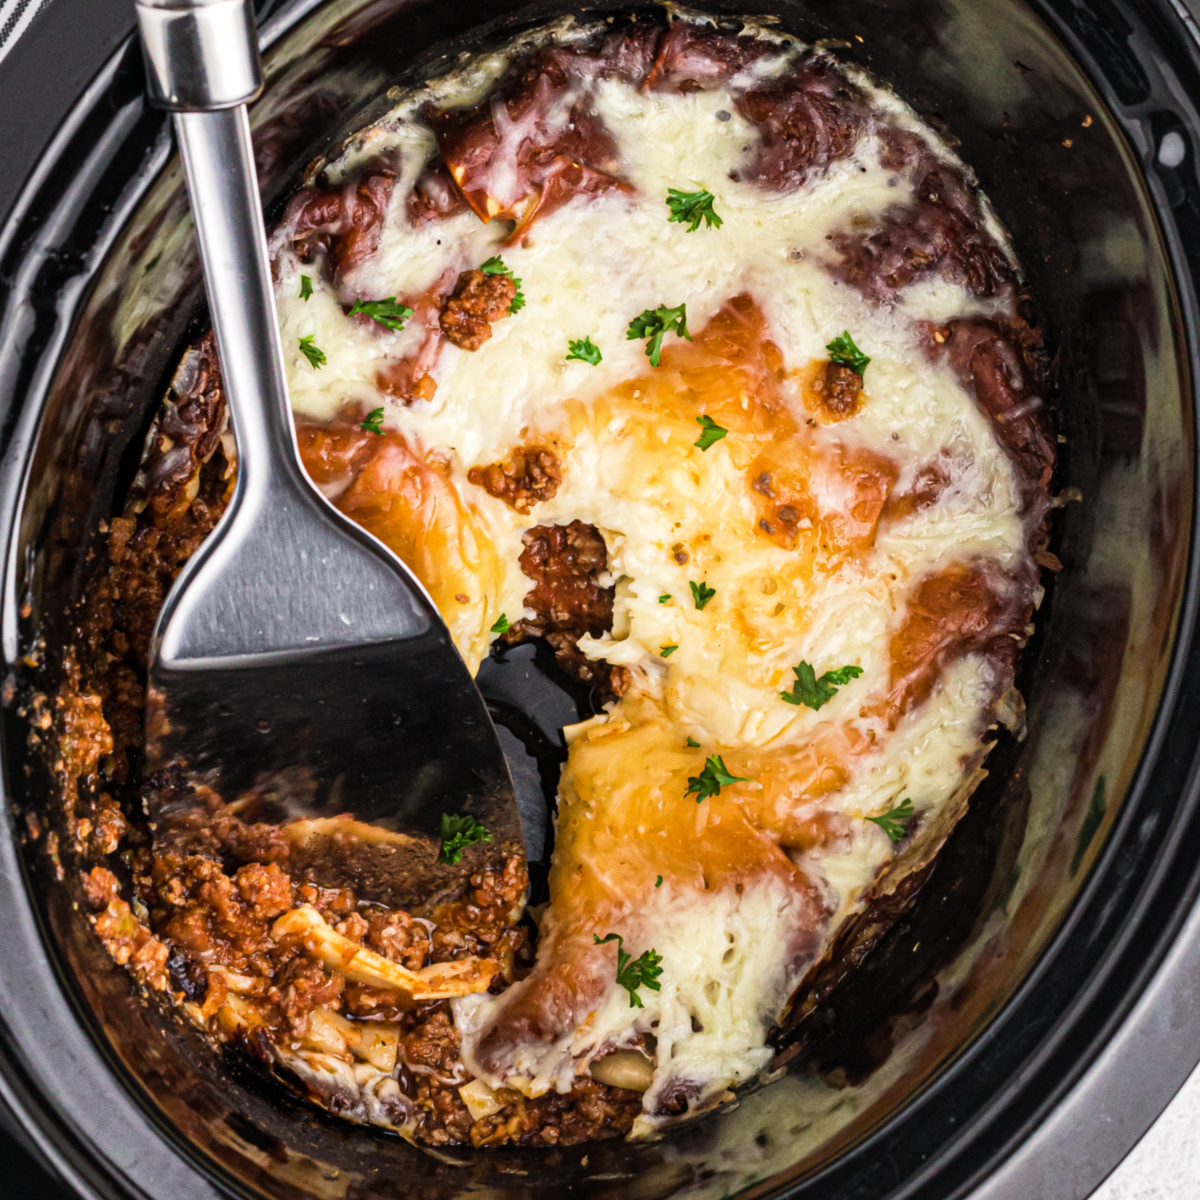 Lasagna in a crockpot ready to serve.